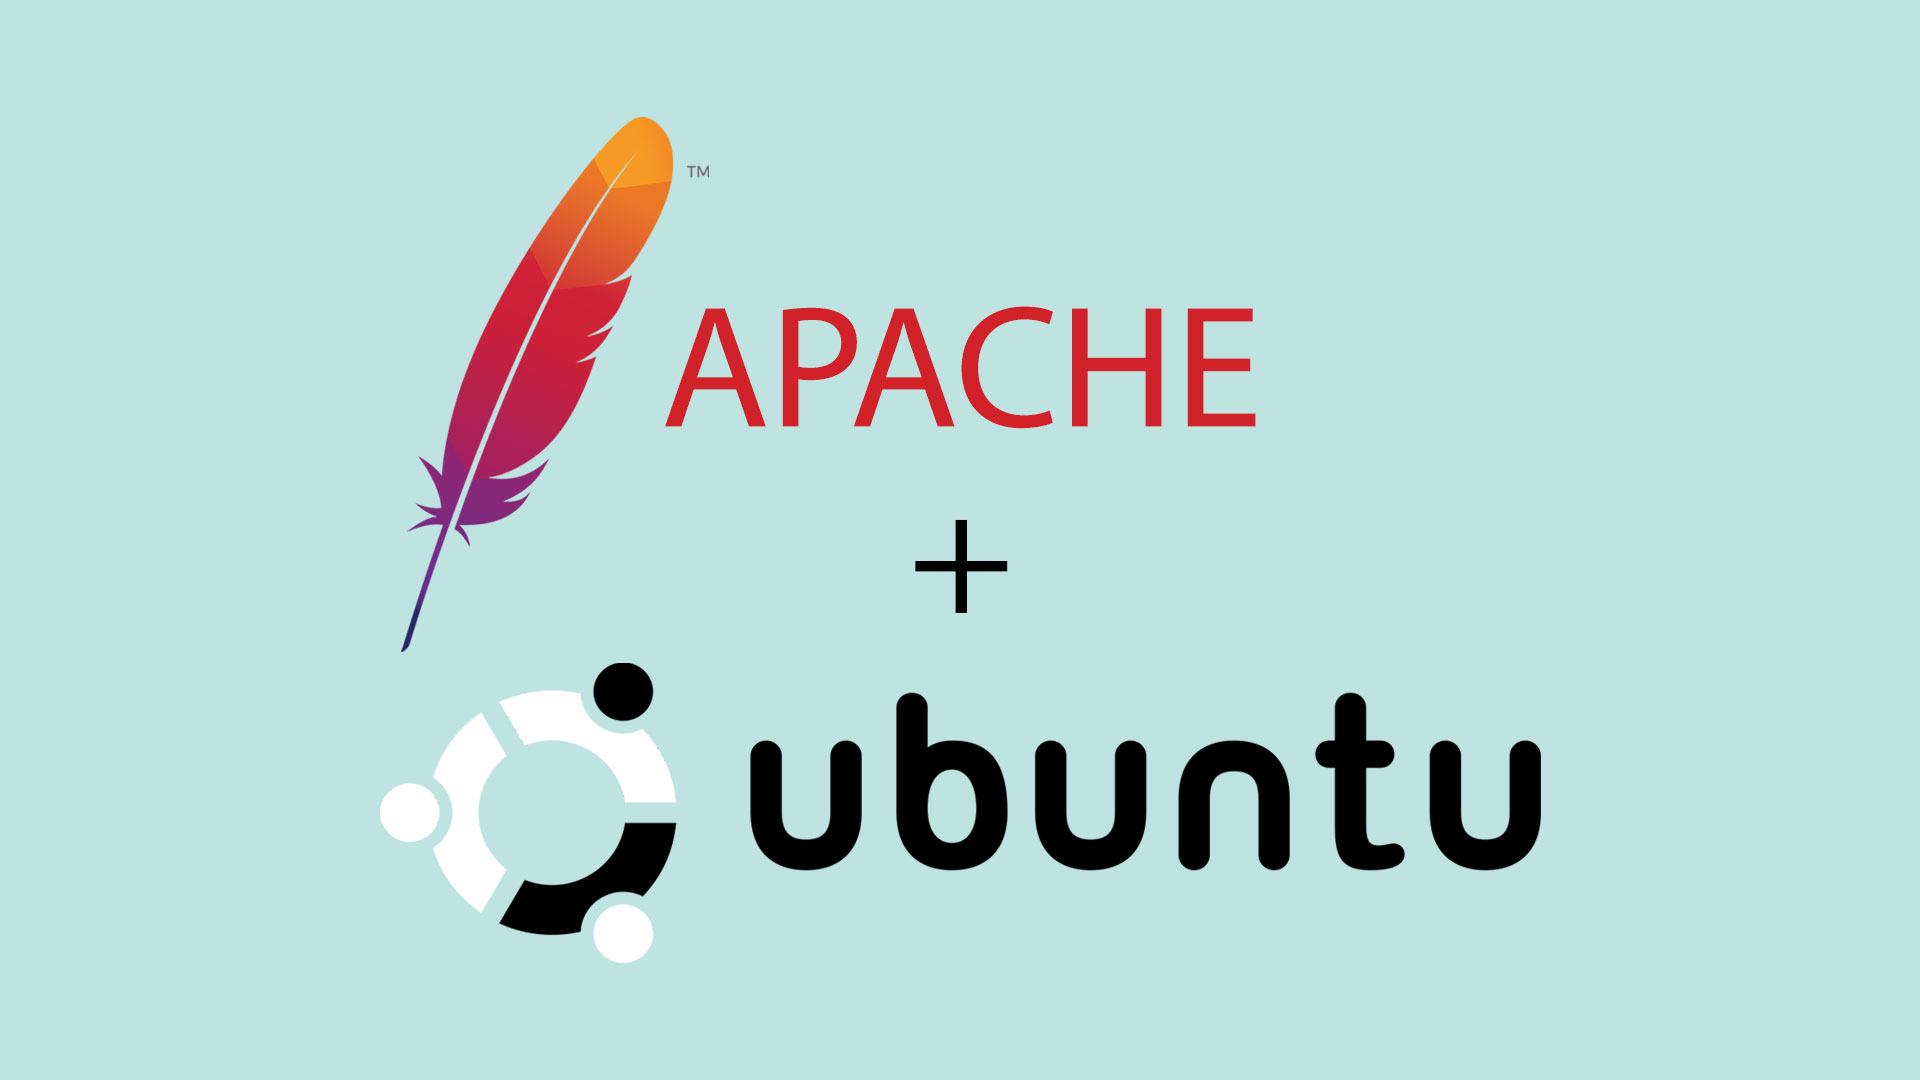 How to Install Apache2 on Ubuntu 16.04 / 18.04 / 18.10